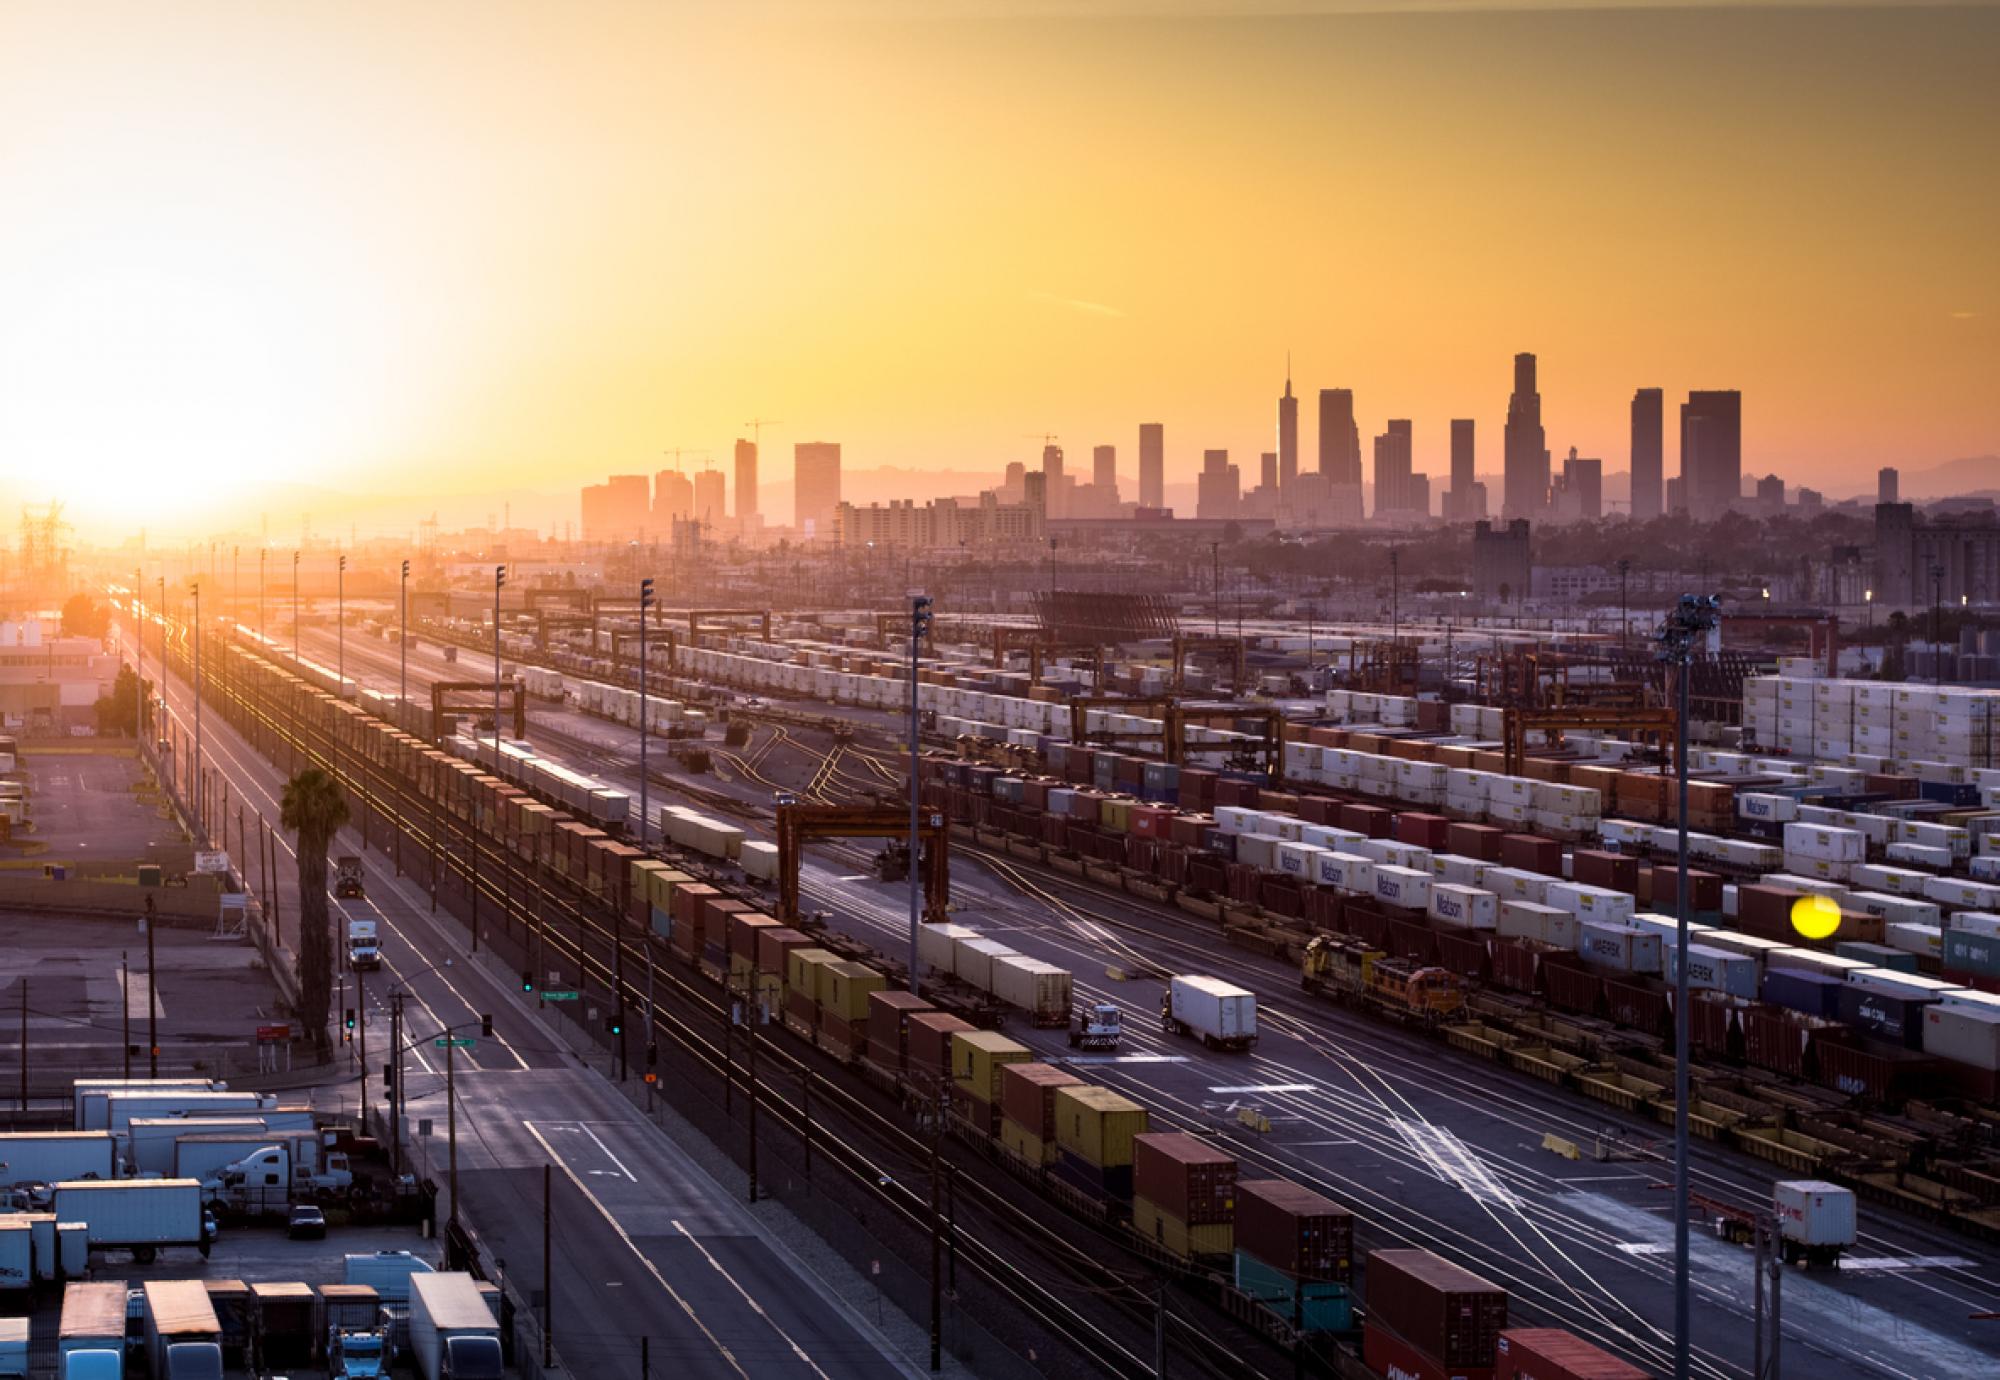 California Hi-Speed Rail enters track design phase